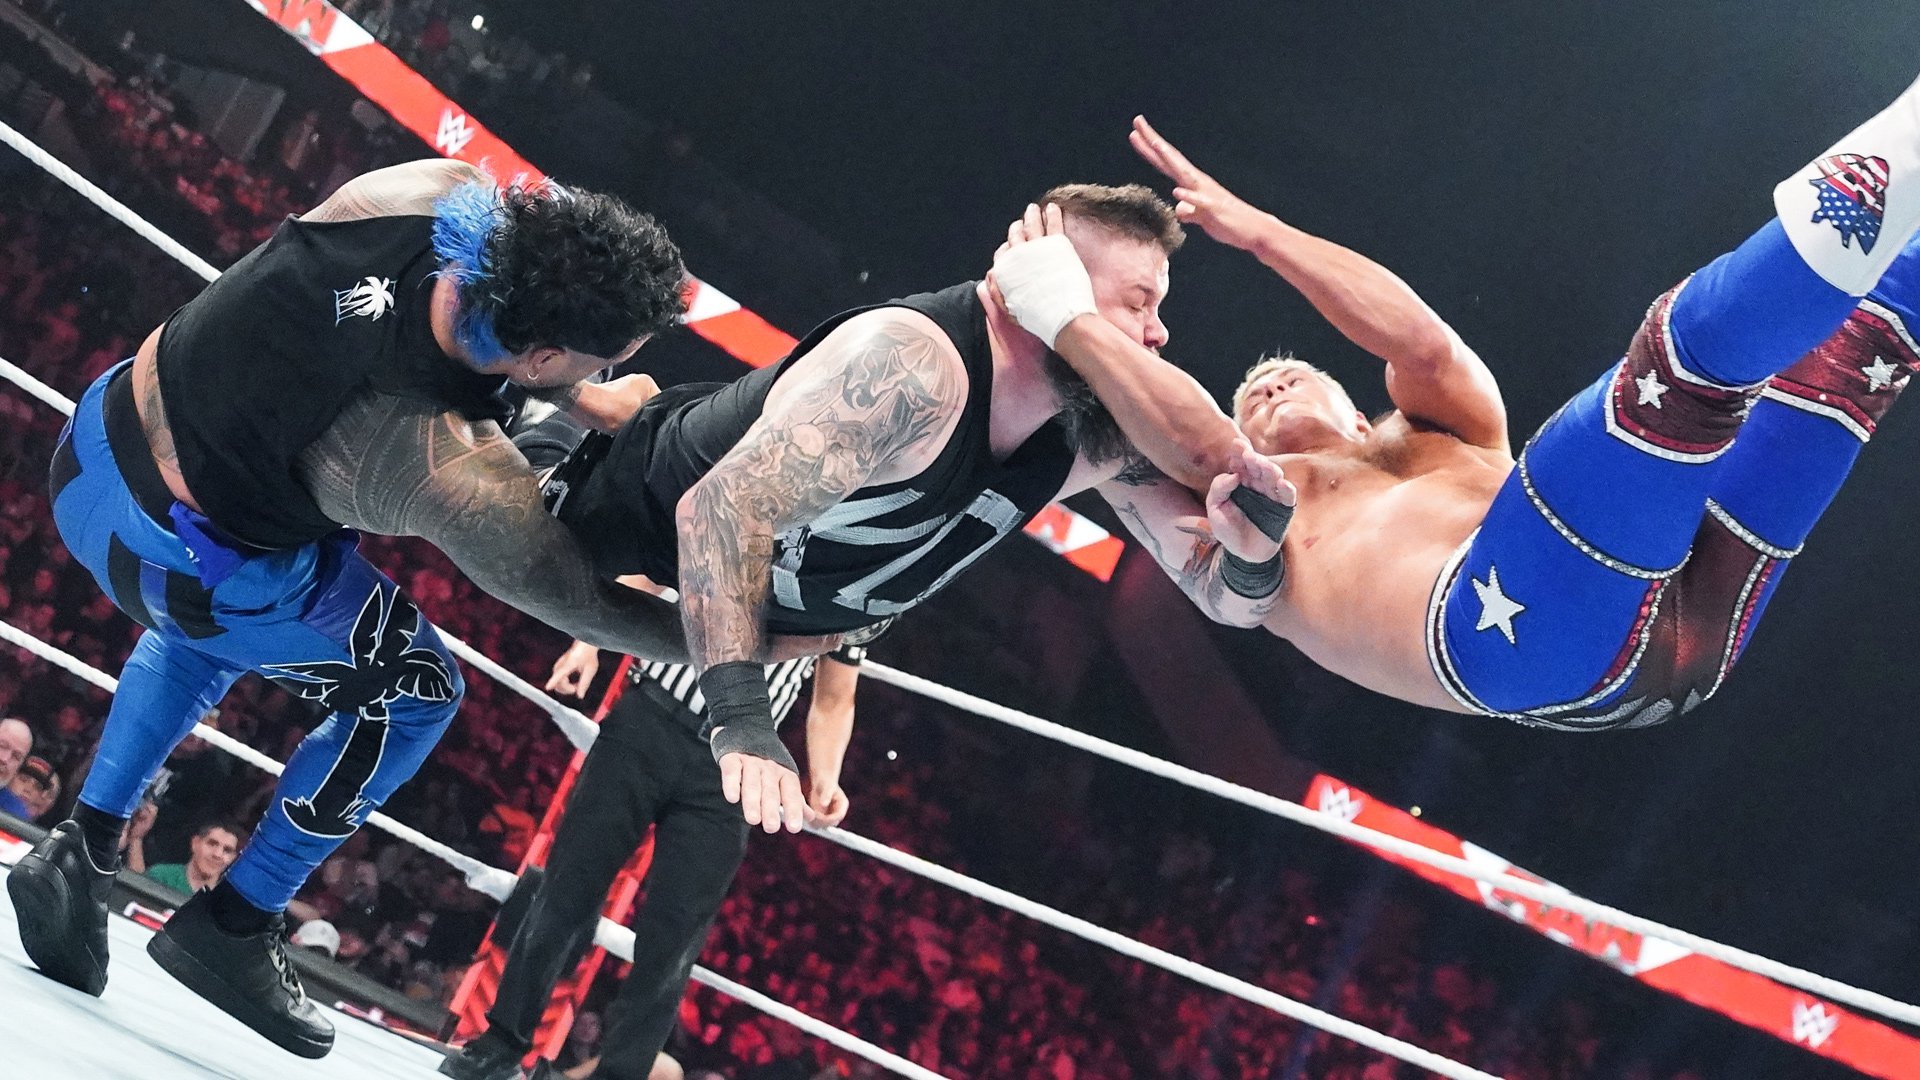 Josh Reddick gets a trim, beard-off with WWE's Daniel Bryan in